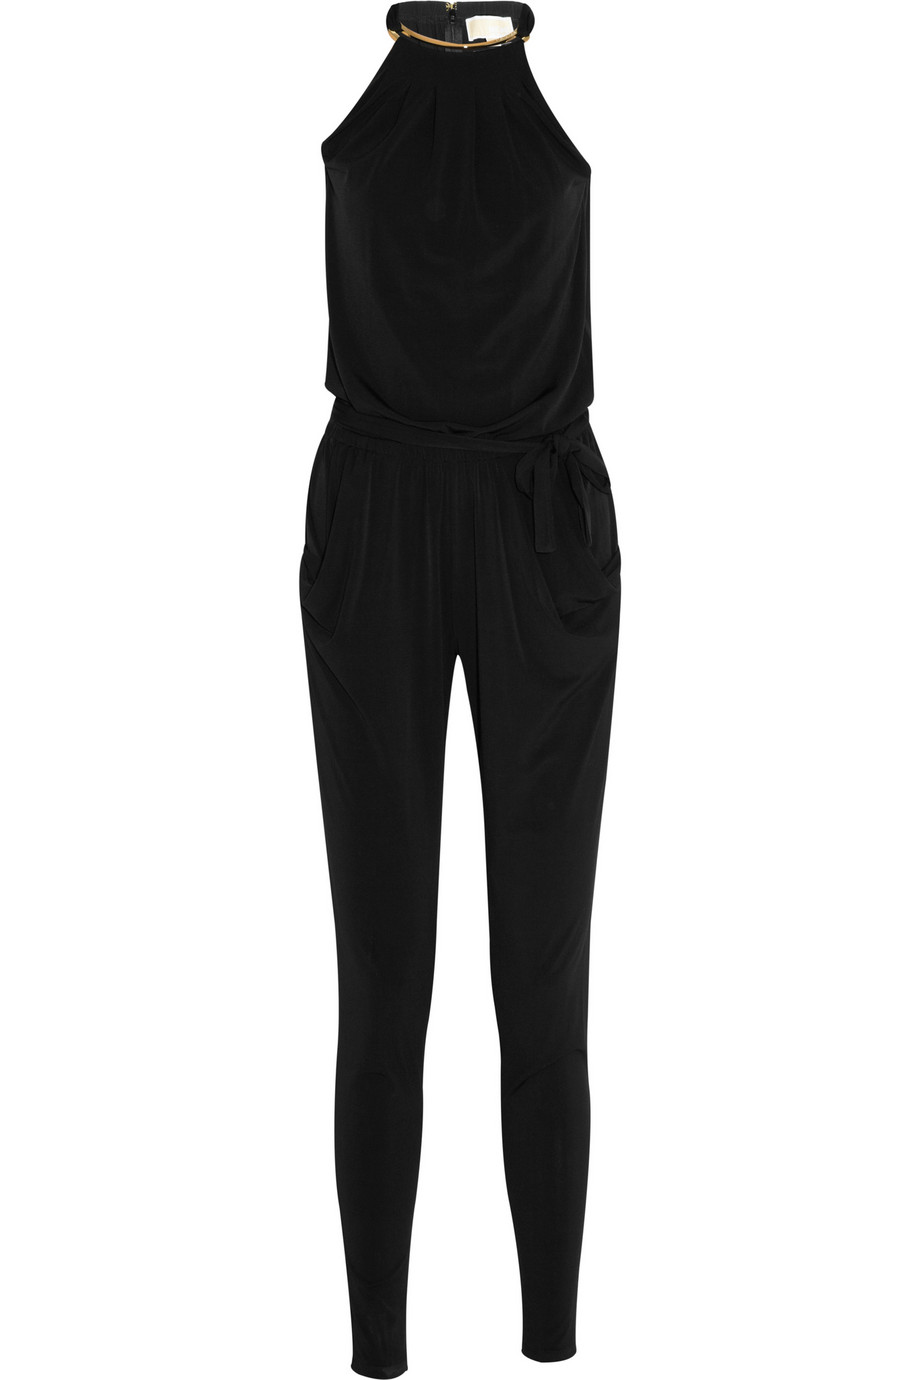 Michael Michael Kors Satin-jersey Jumpsuit in Black | Lyst